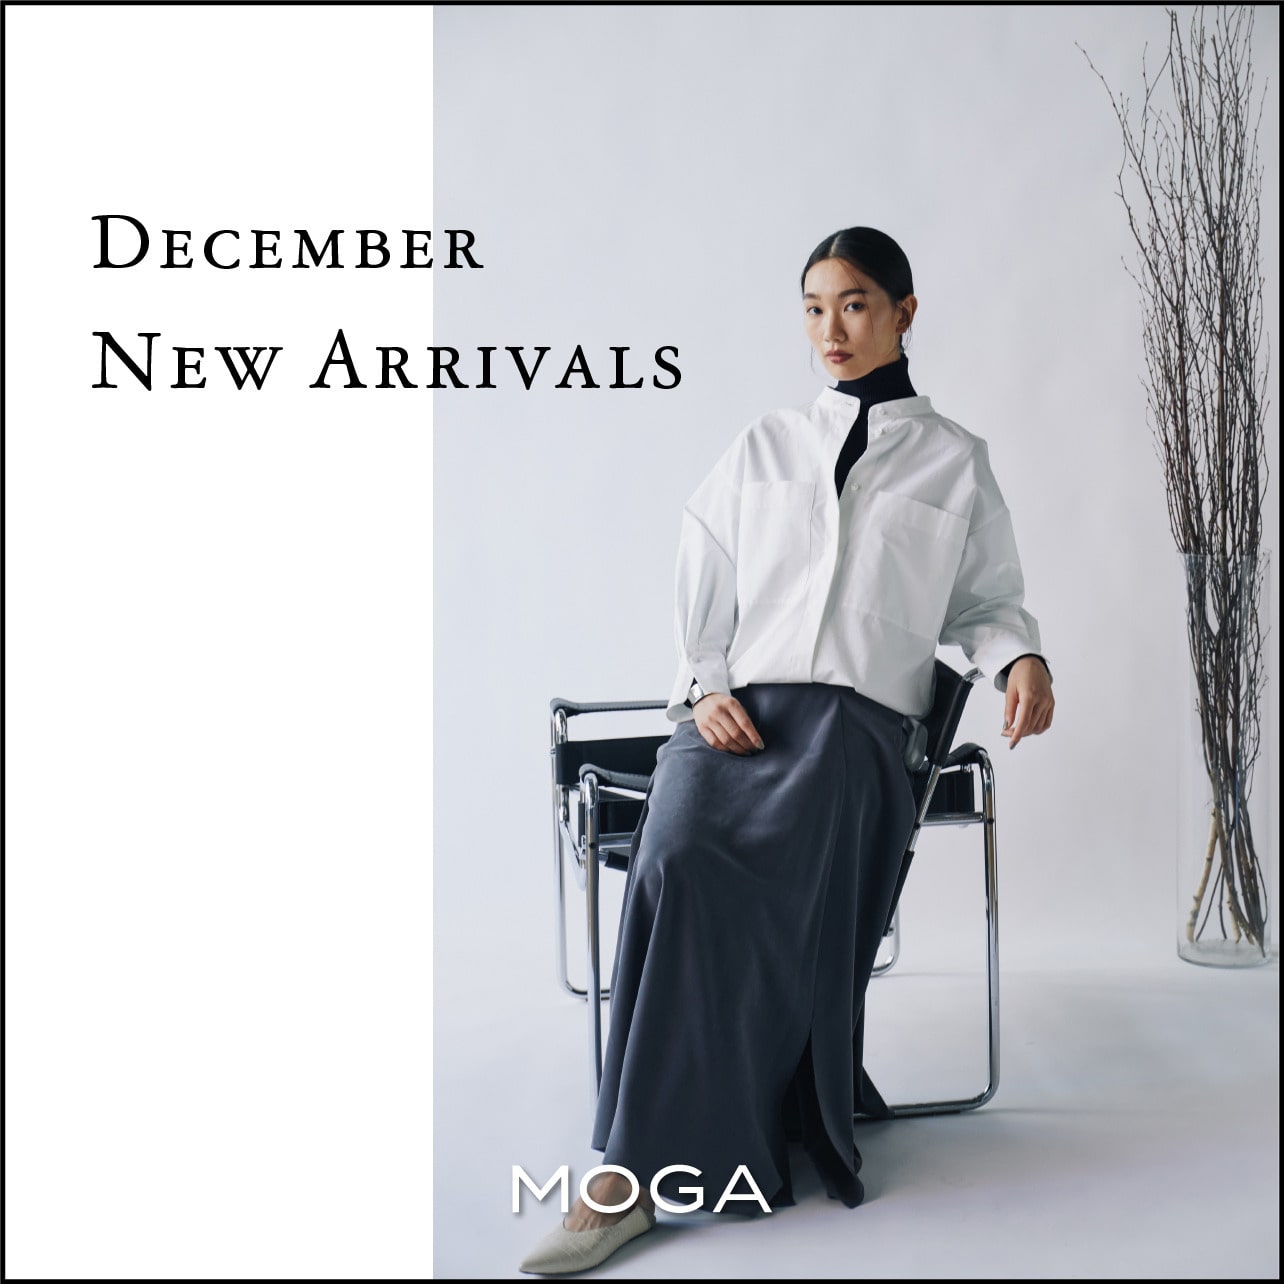 MOGA 22 December New Arrivals